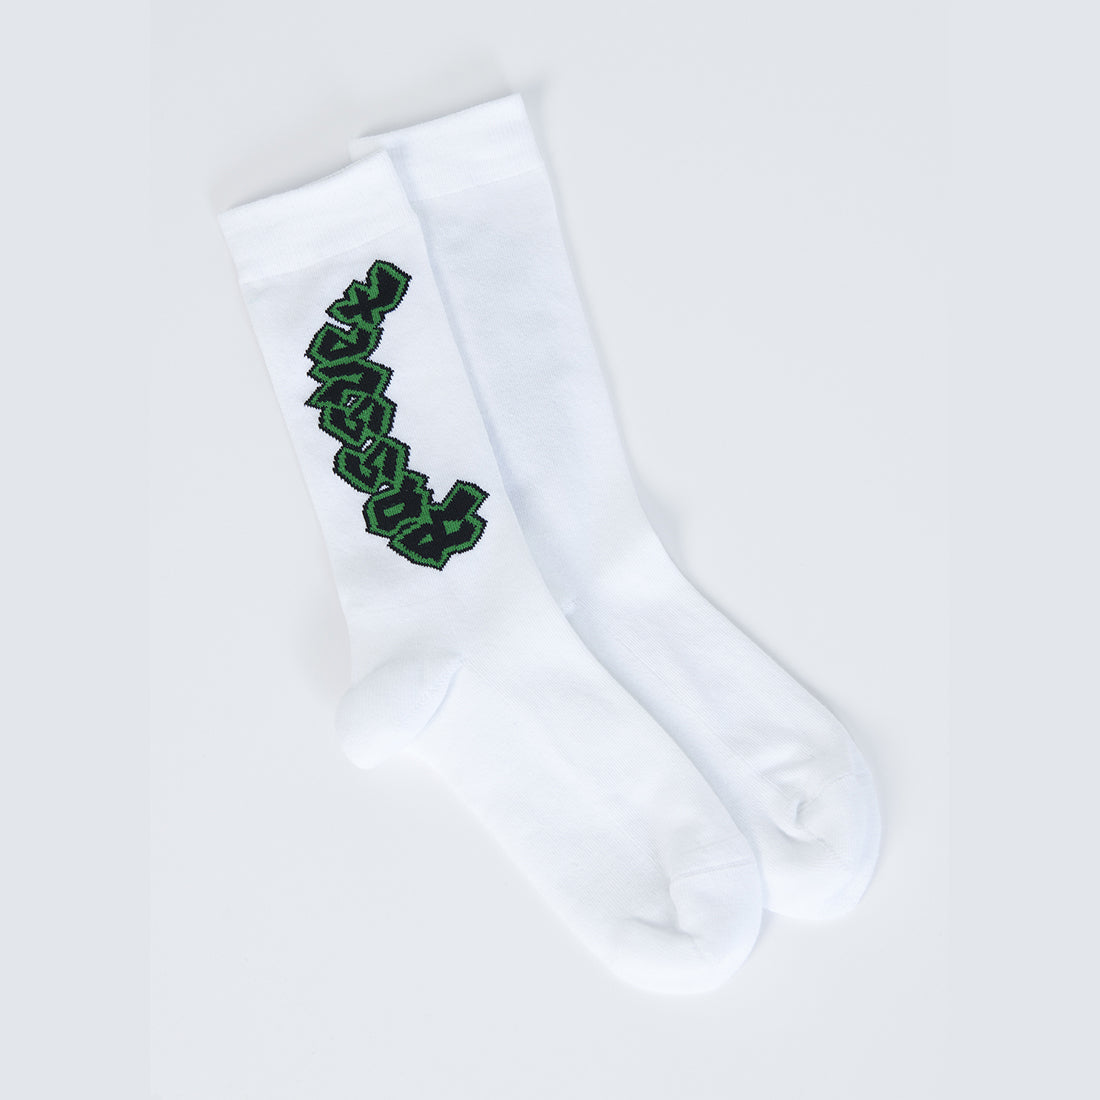 Calzini Rassvet - Goth Socks -Bianco